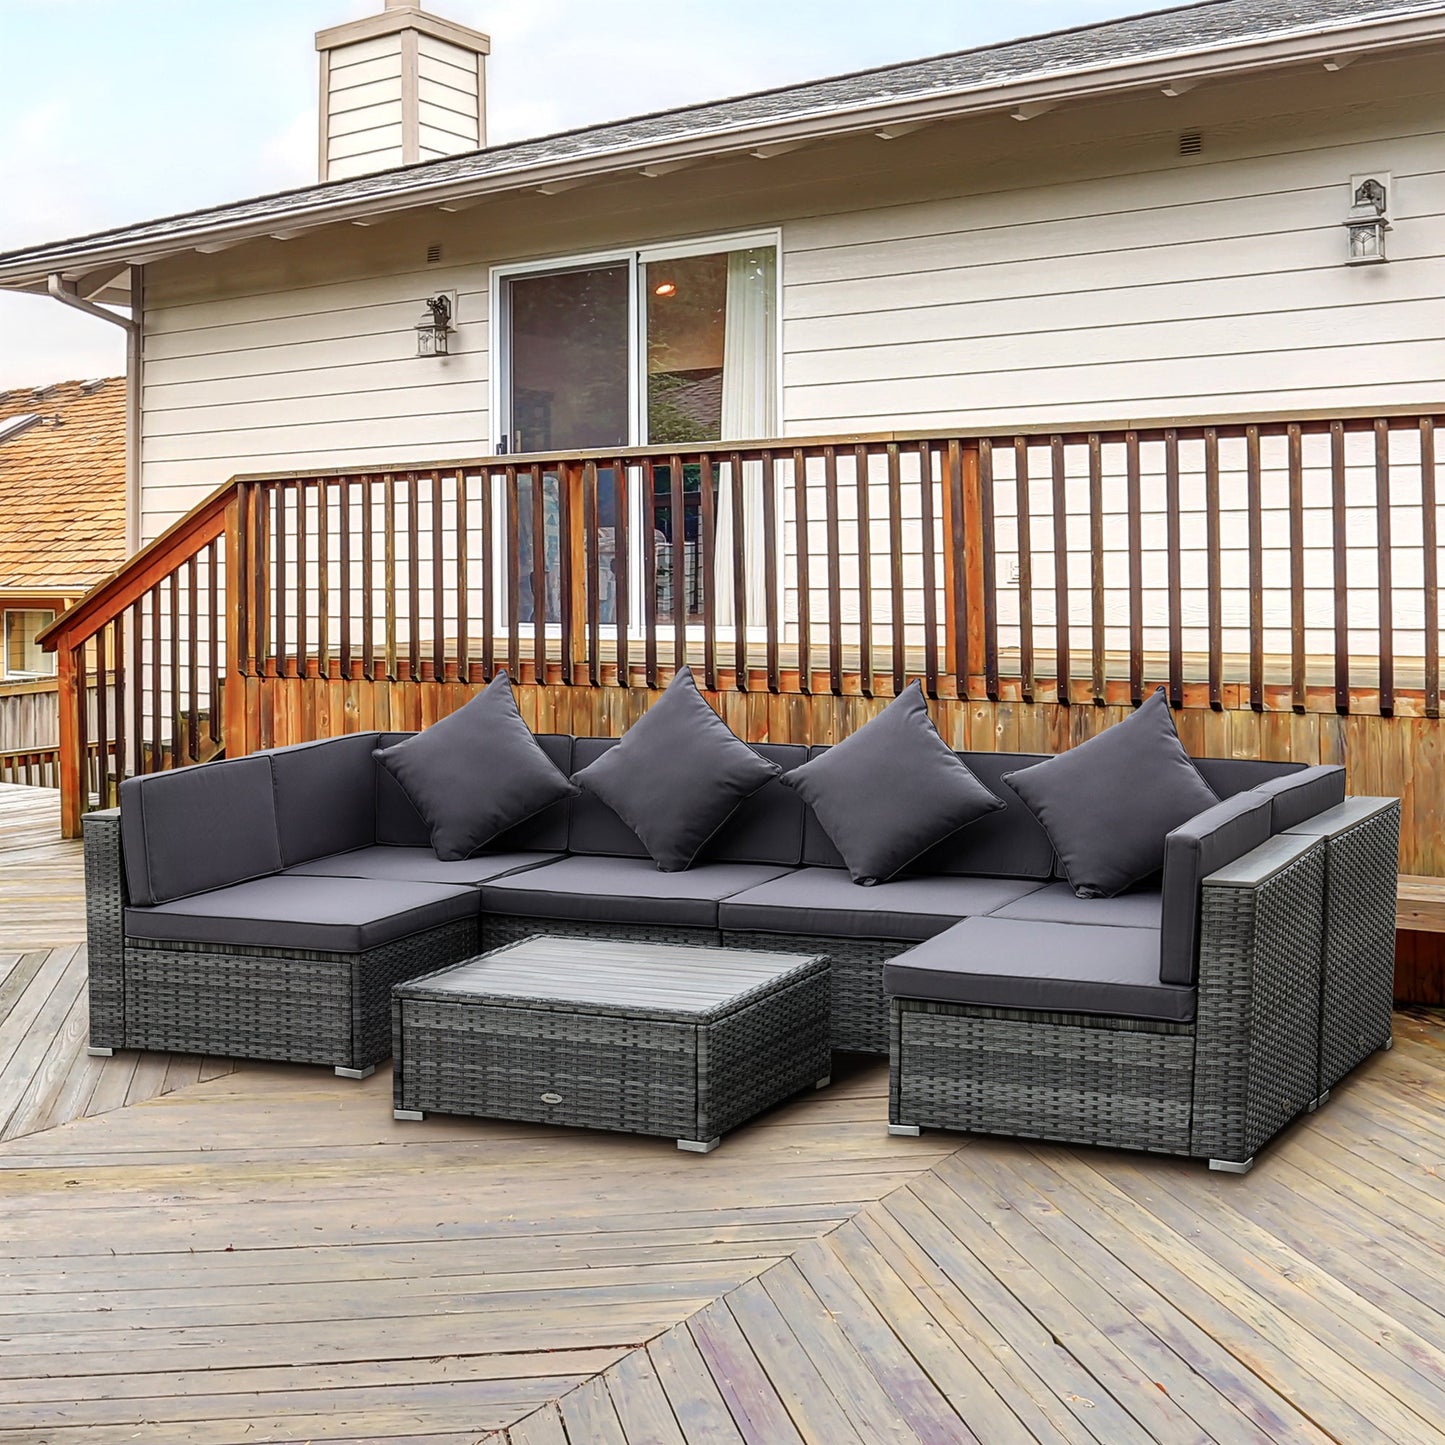 Outdoor and Garden-7-Piece Patio Furniture Sets PE Rattan Sectional Sofa Set Outdoor Conversation Set w/ Coffee Table & Cushion for Garden, Backyard, Grey - Outdoor Style Company